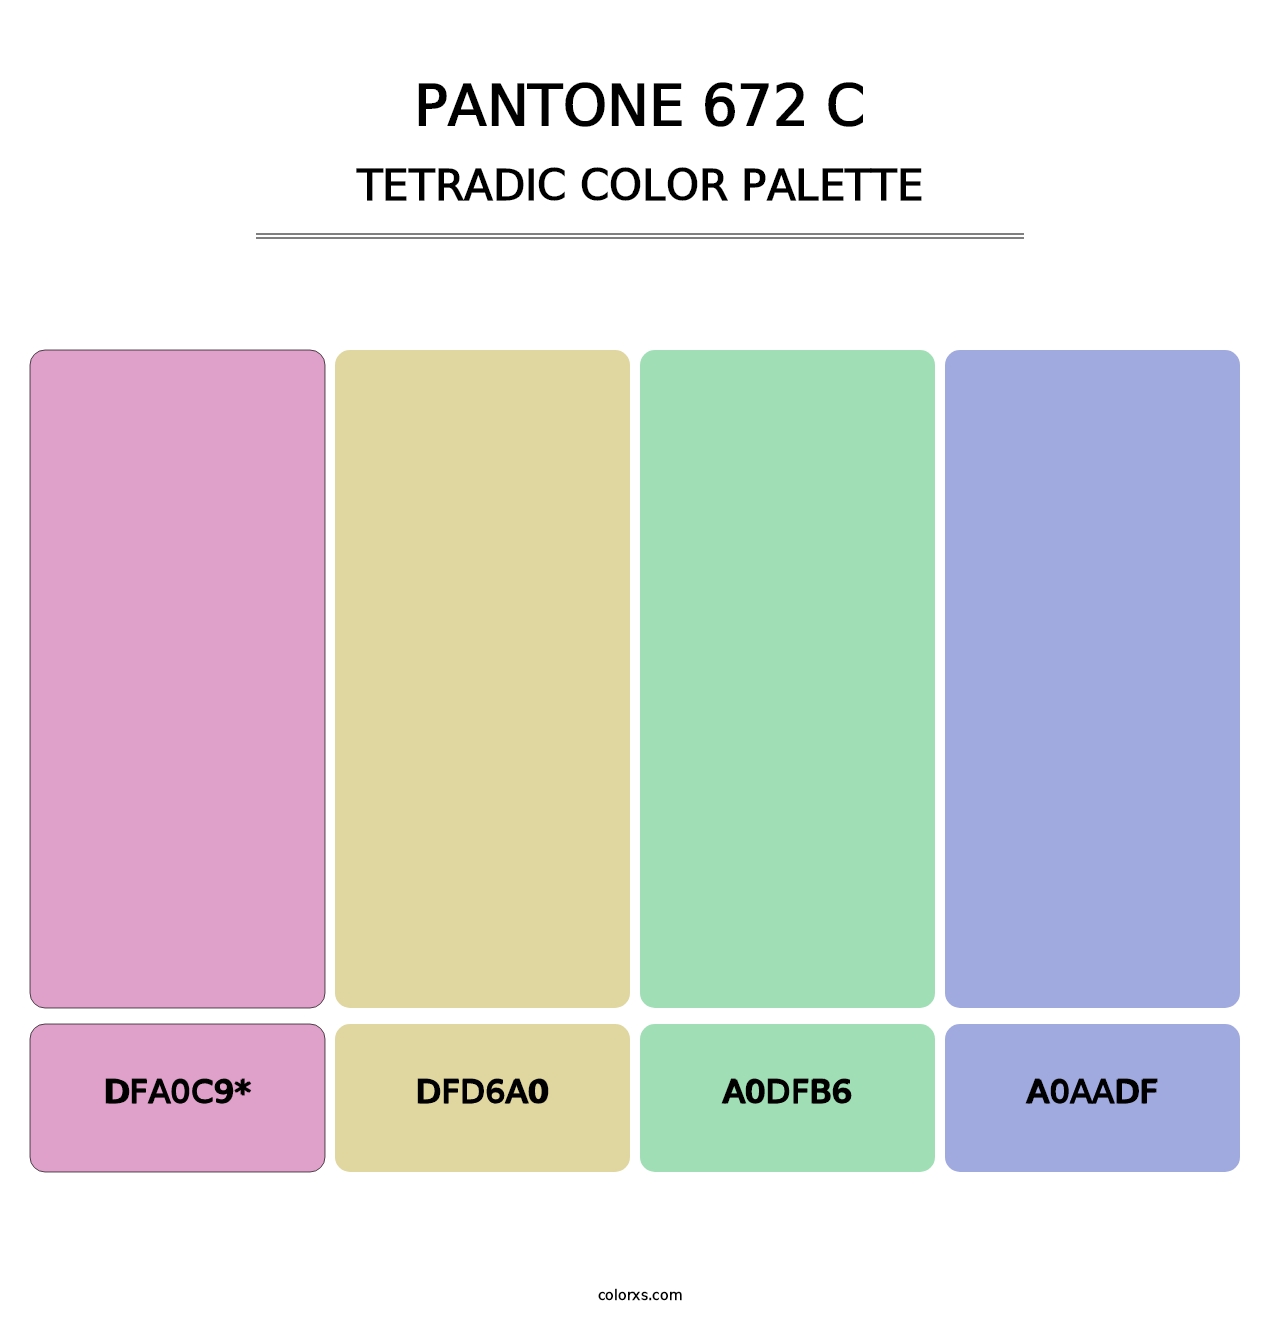 PANTONE 672 C - Tetradic Color Palette